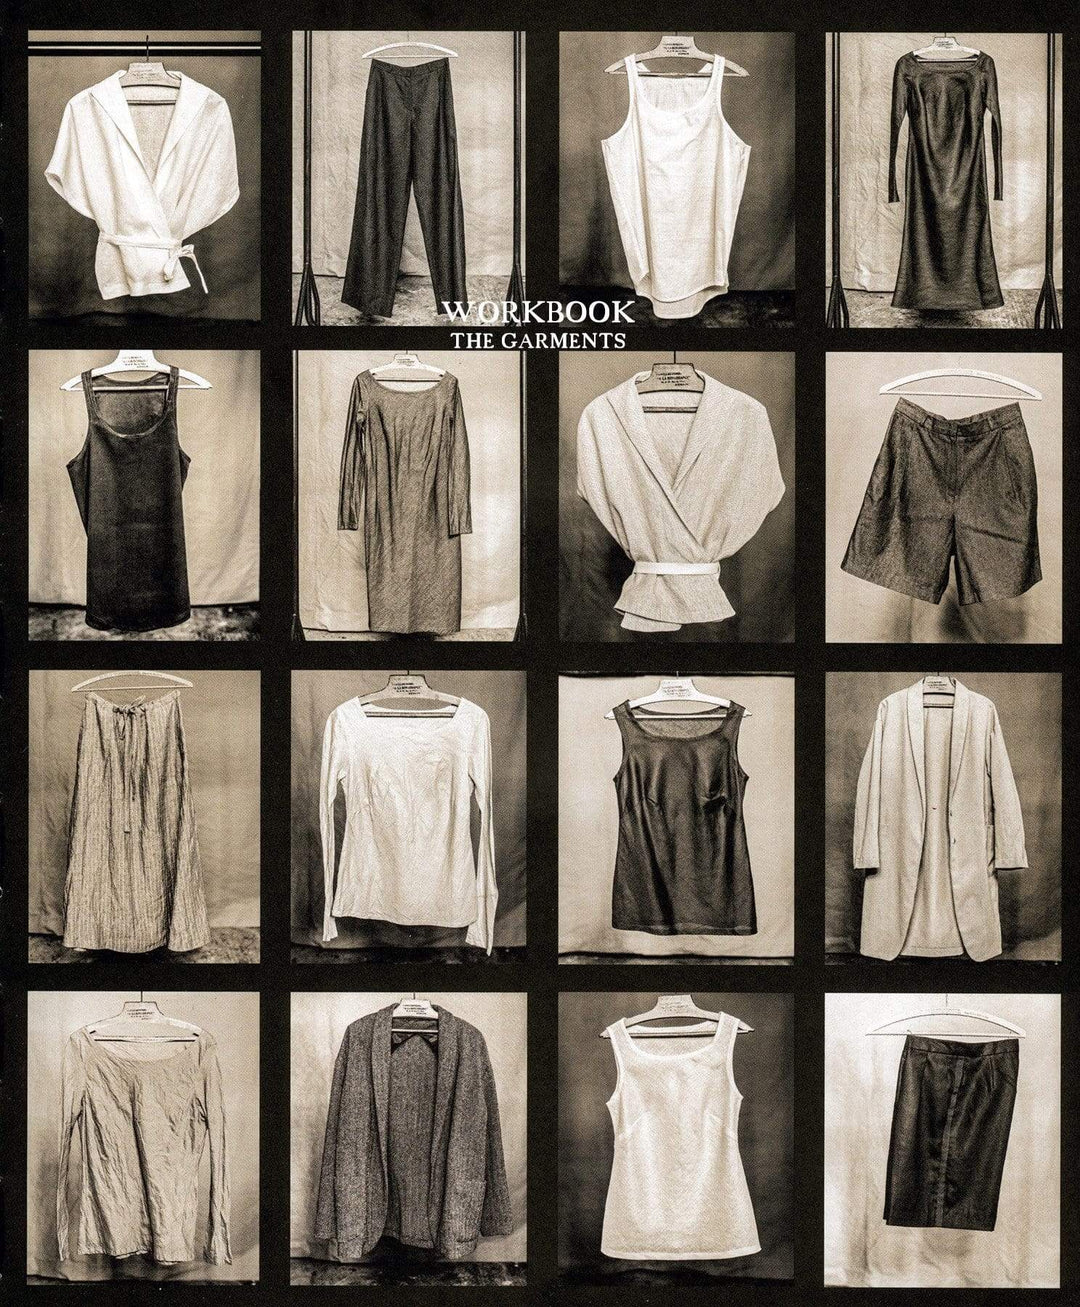 Merchant & Mills Workbook: All Season Wardrobe